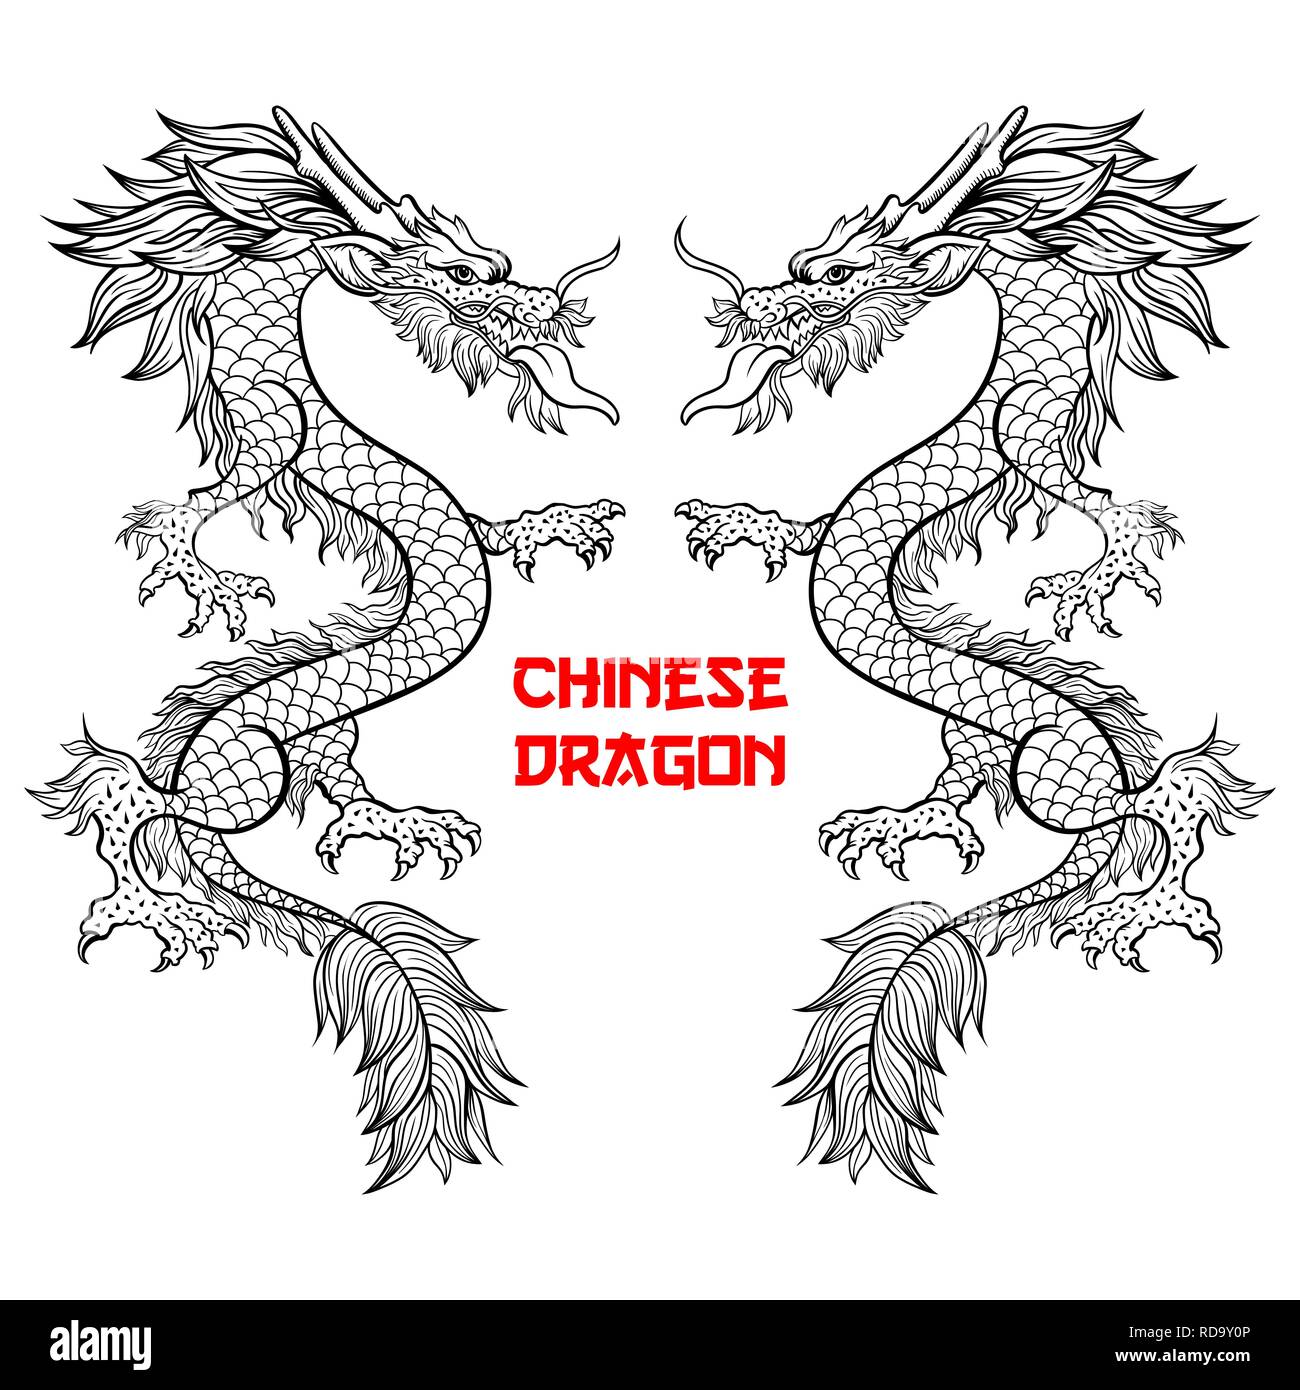 Mythological chinese dragons Stock Vector Images - Alamy